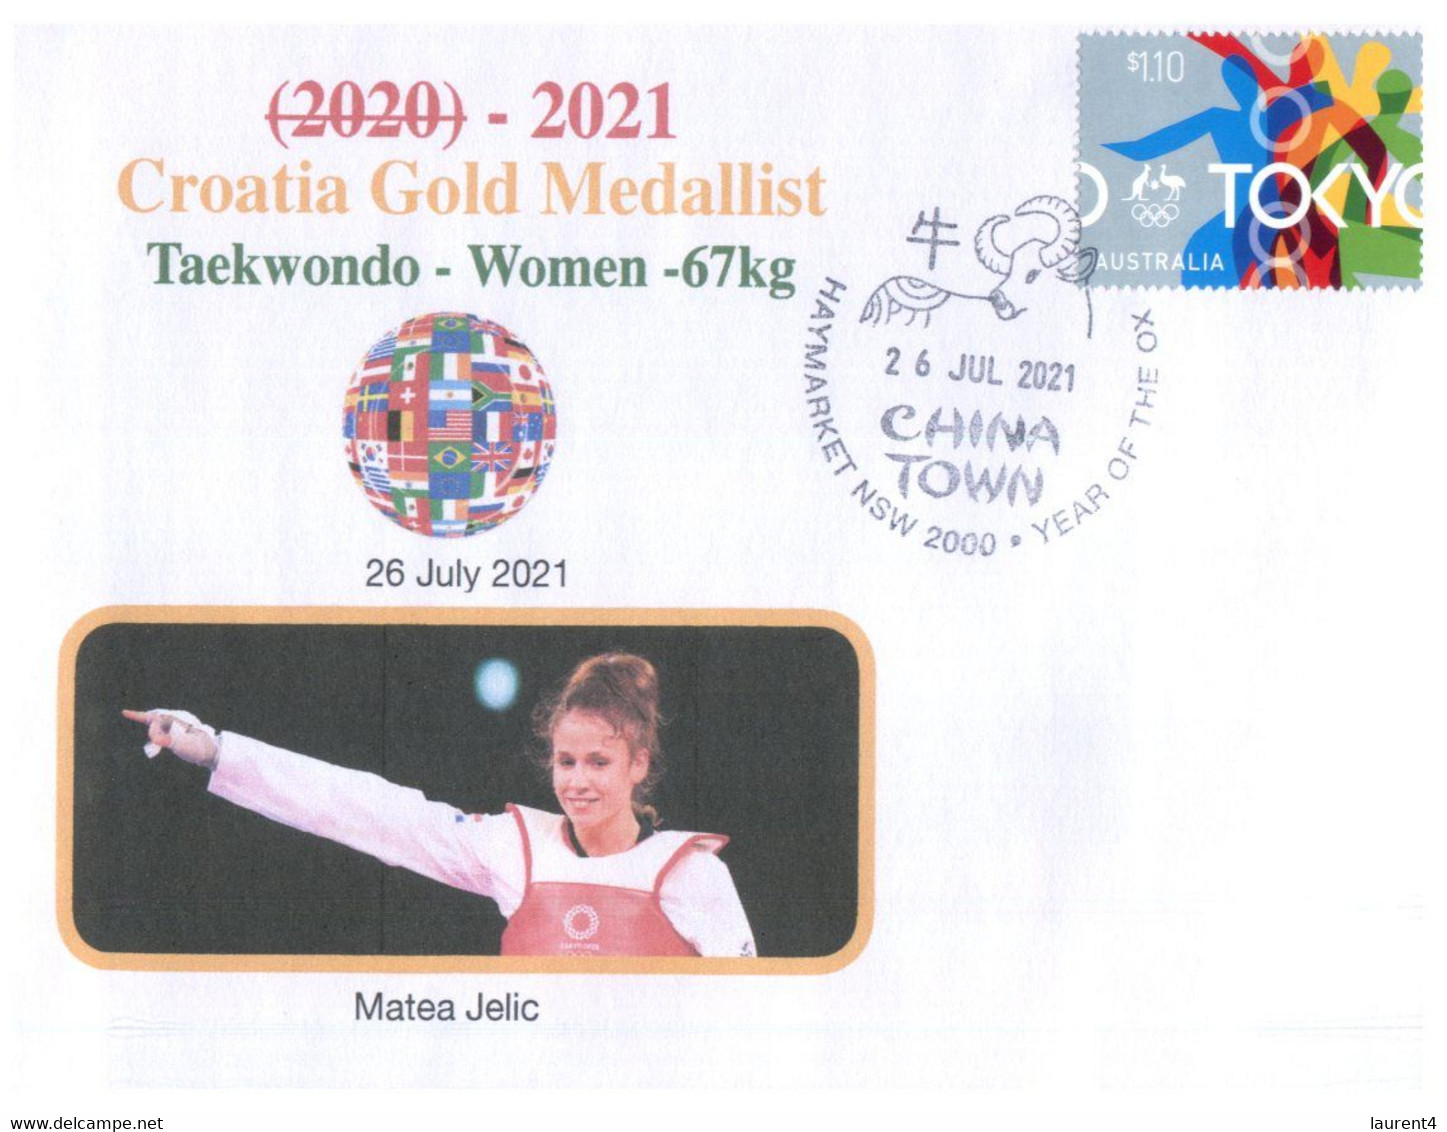 (WW 2) 2020 Tokyo Summer Olympic Games - Croatia Gold Medal - 26-7-2021 - Women's Taekwondo - Sommer 2020: Tokio